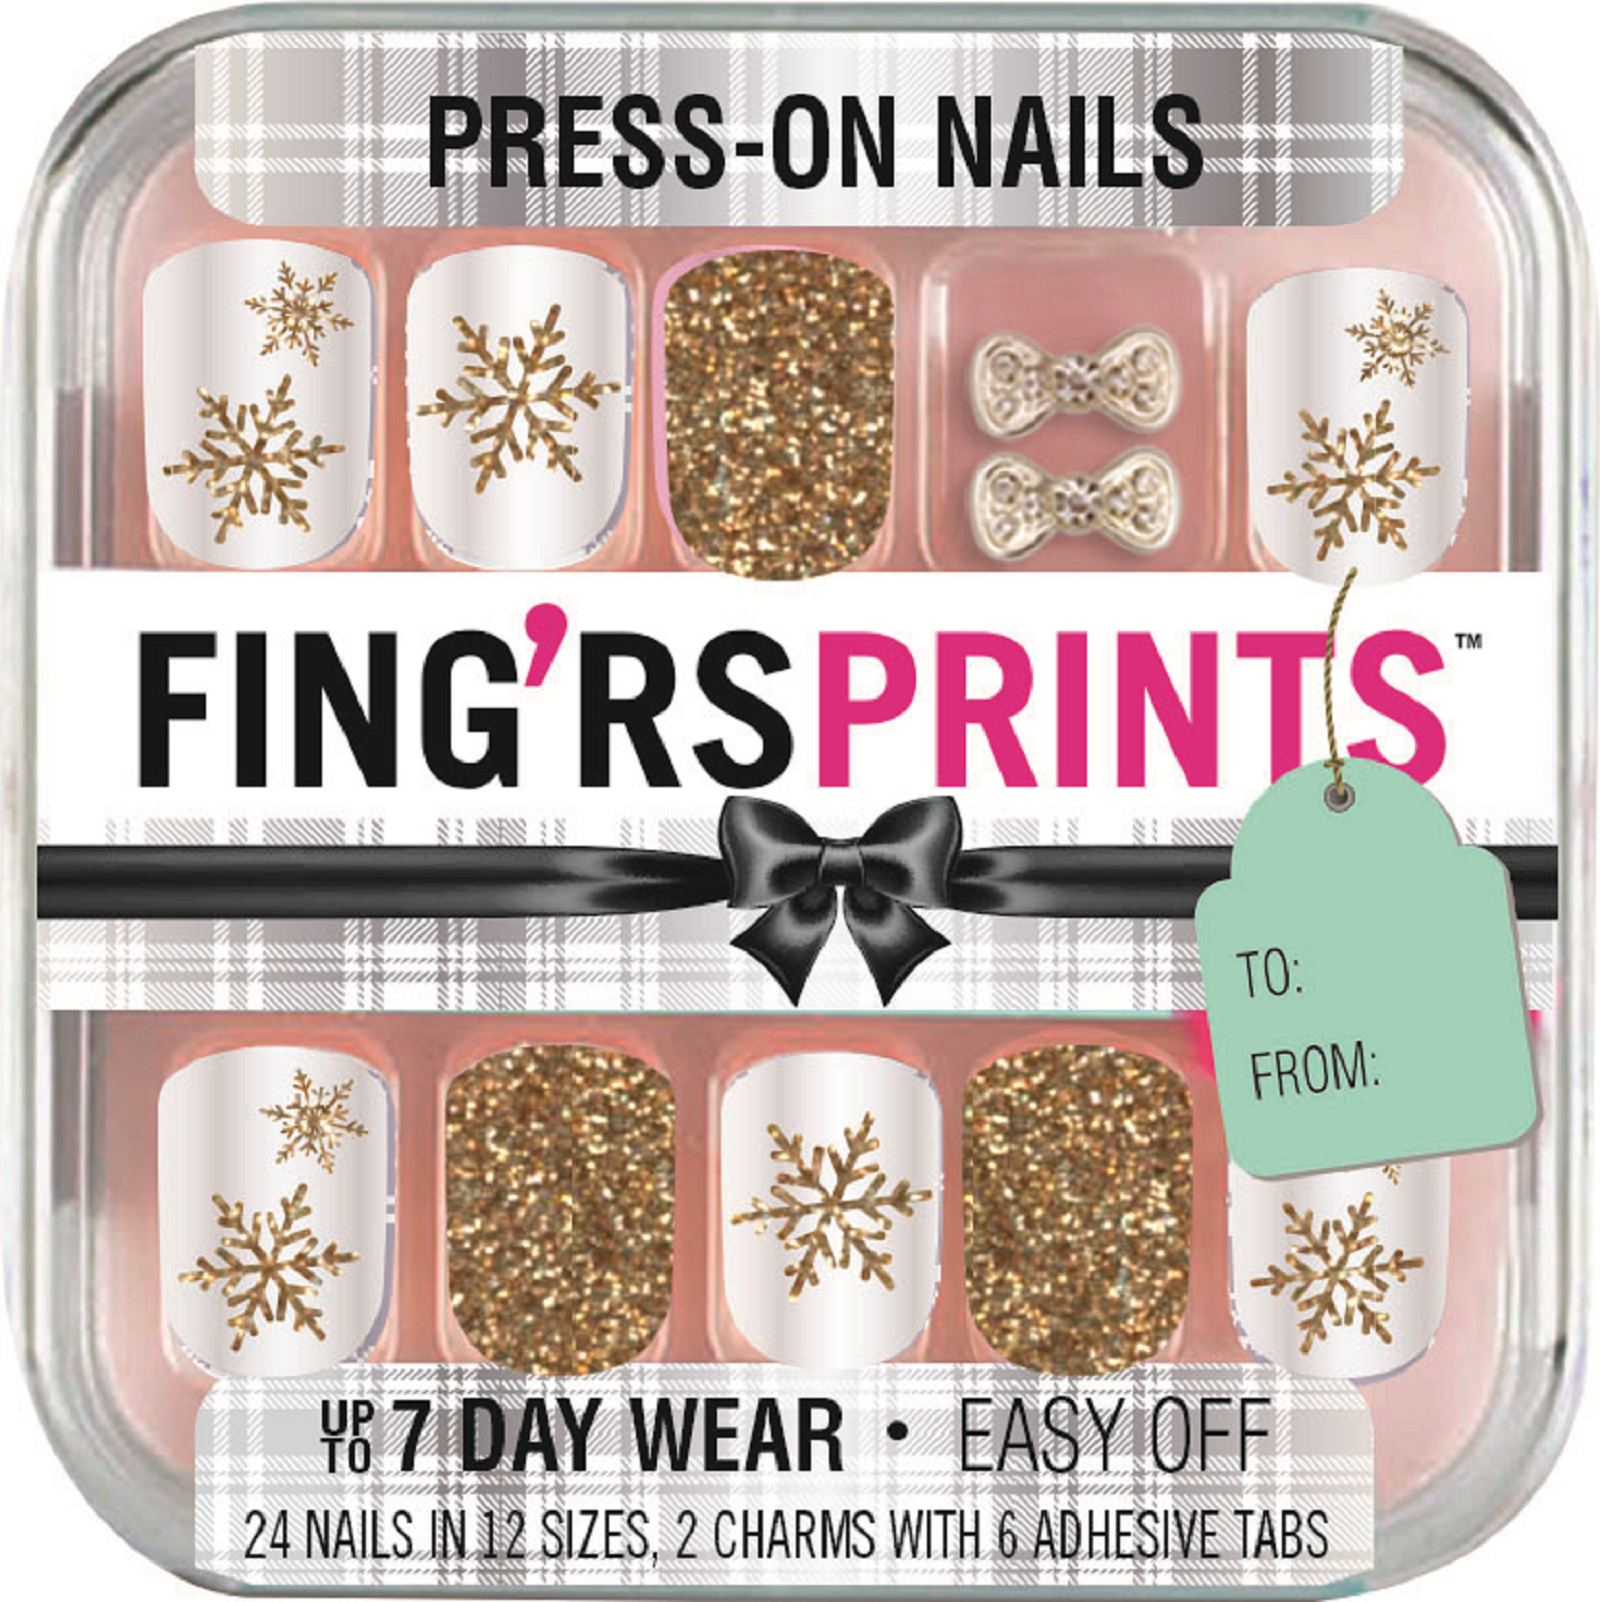 Fing'rs Prints Nails Press-on Nails